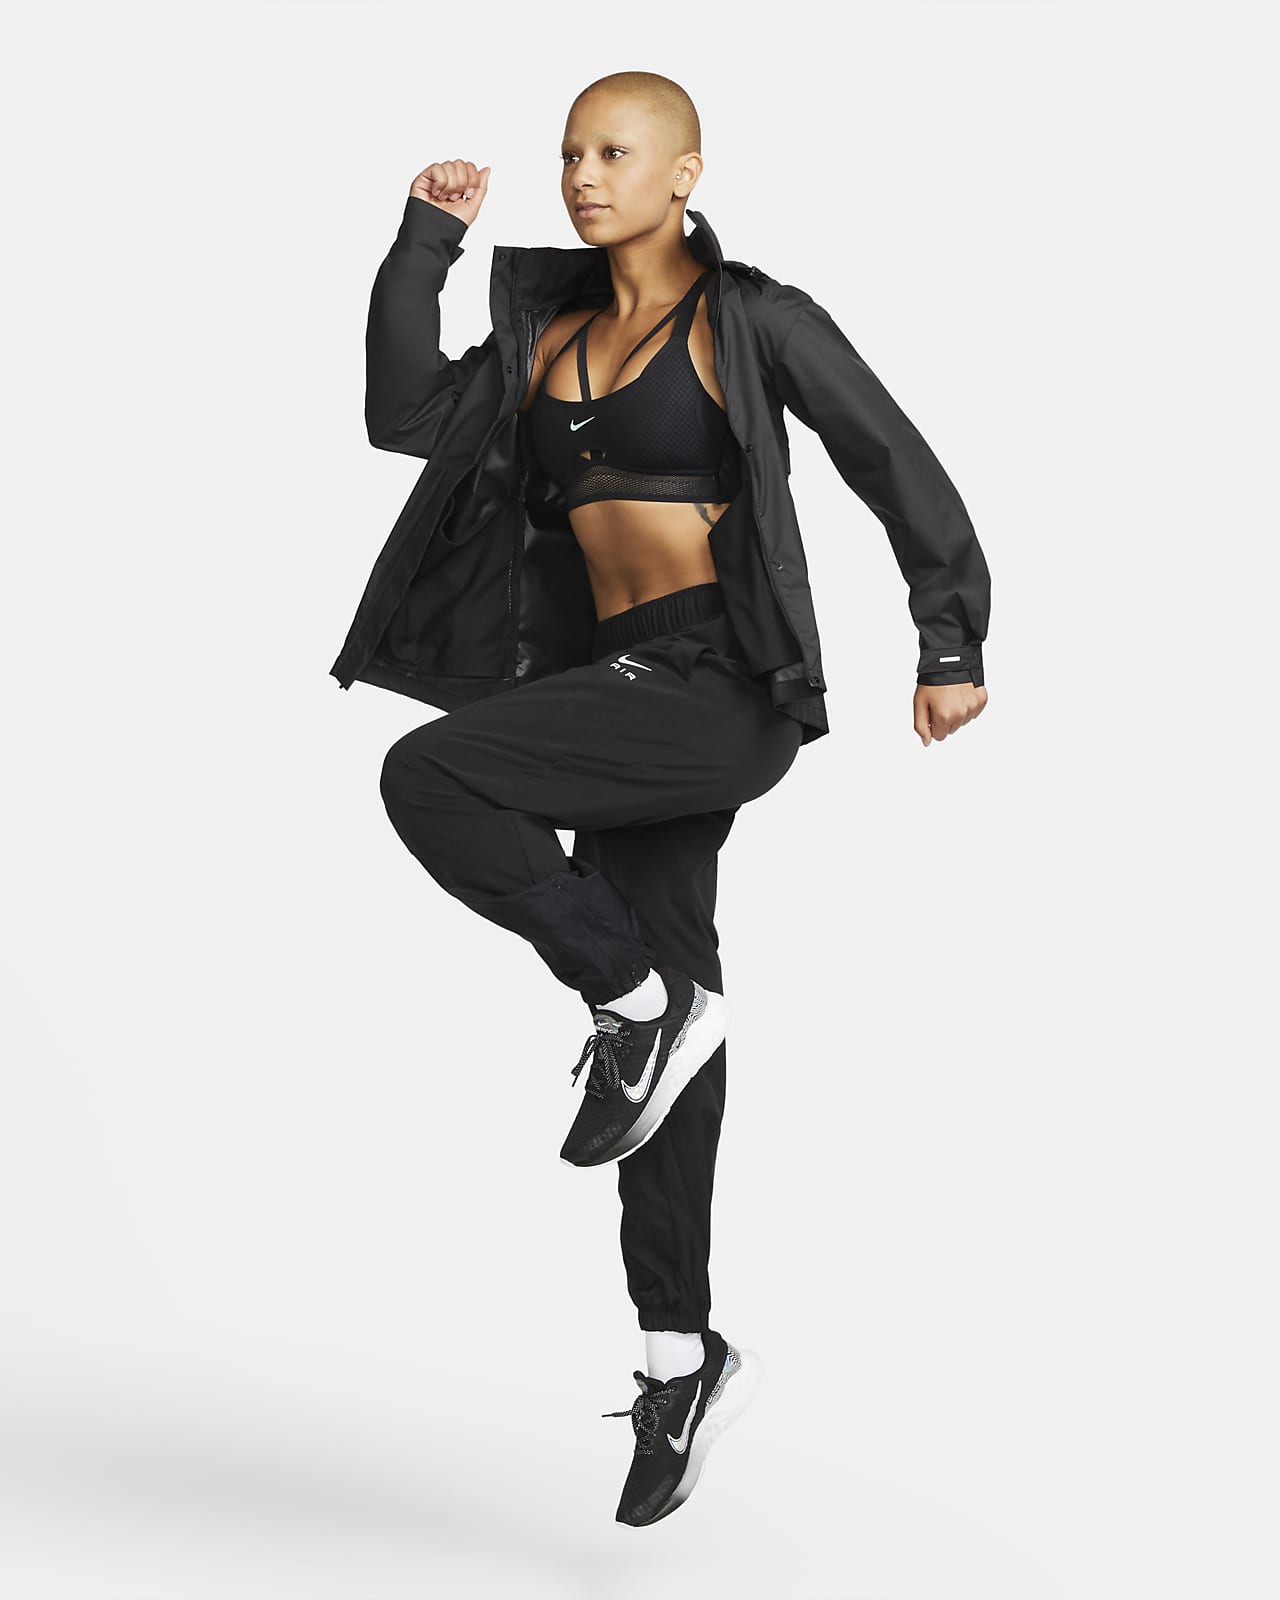 Nike Fast Repel Women\'s Jacket. Running